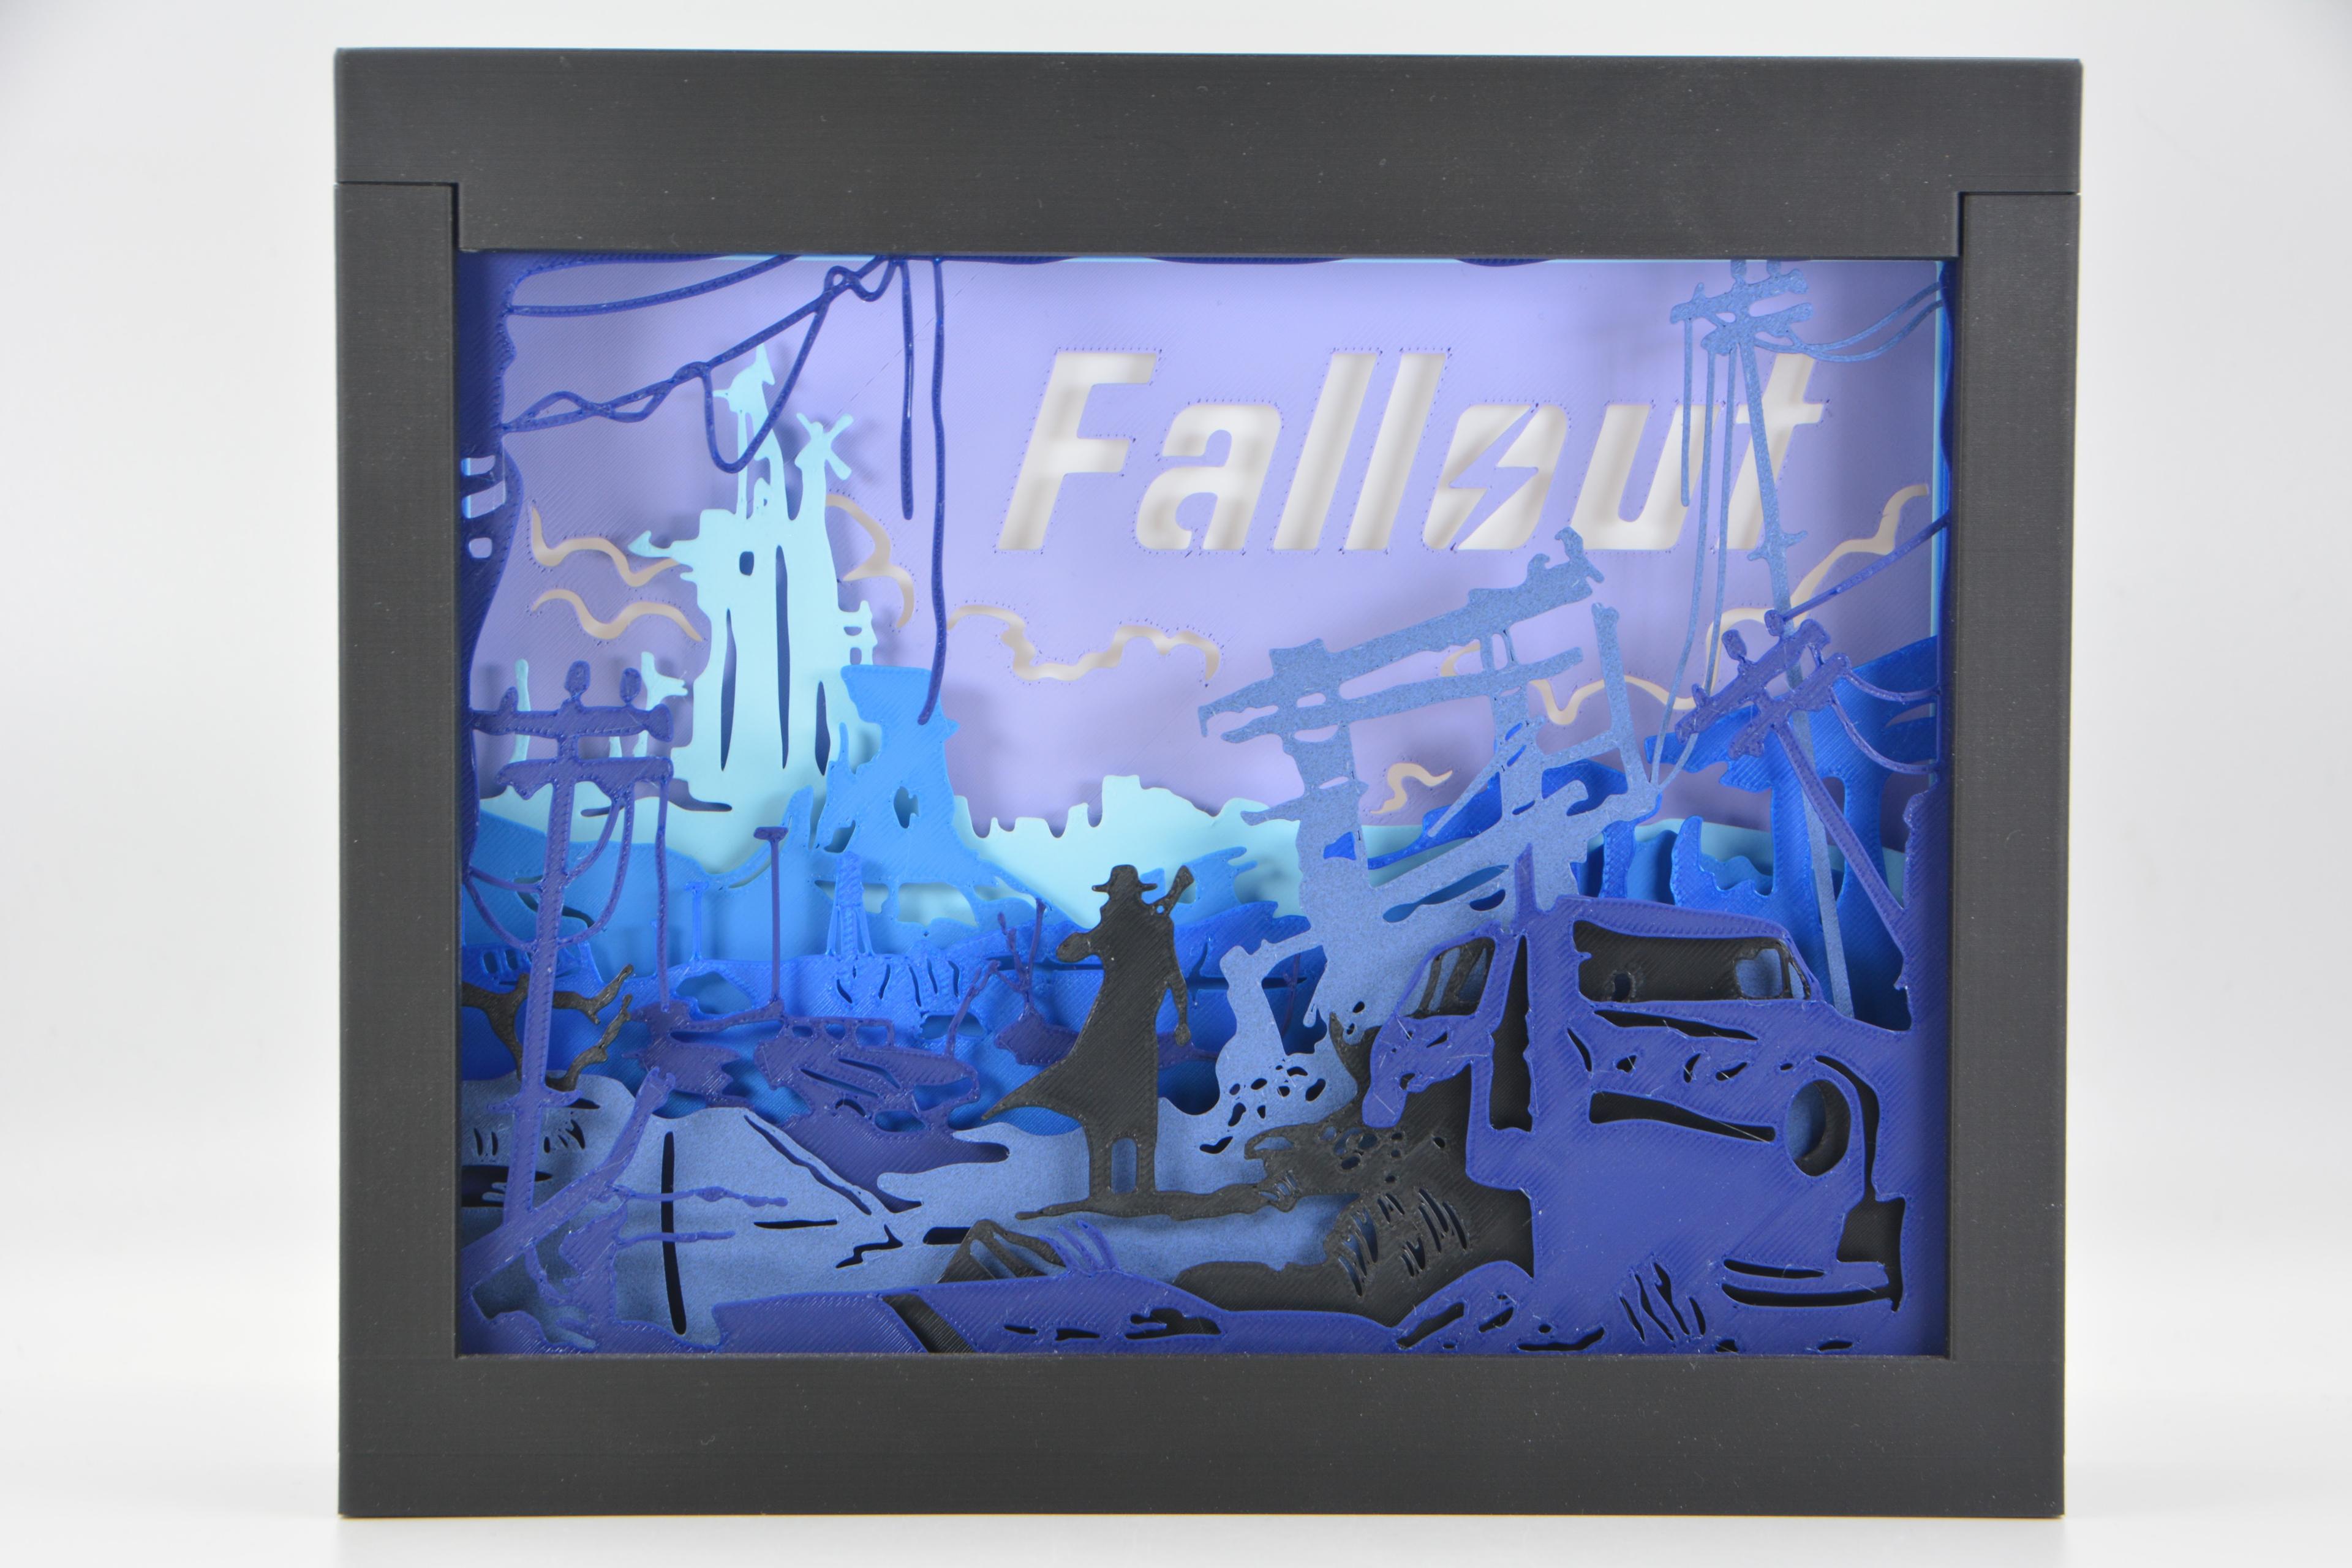 Fallout Shadow Box 3d model